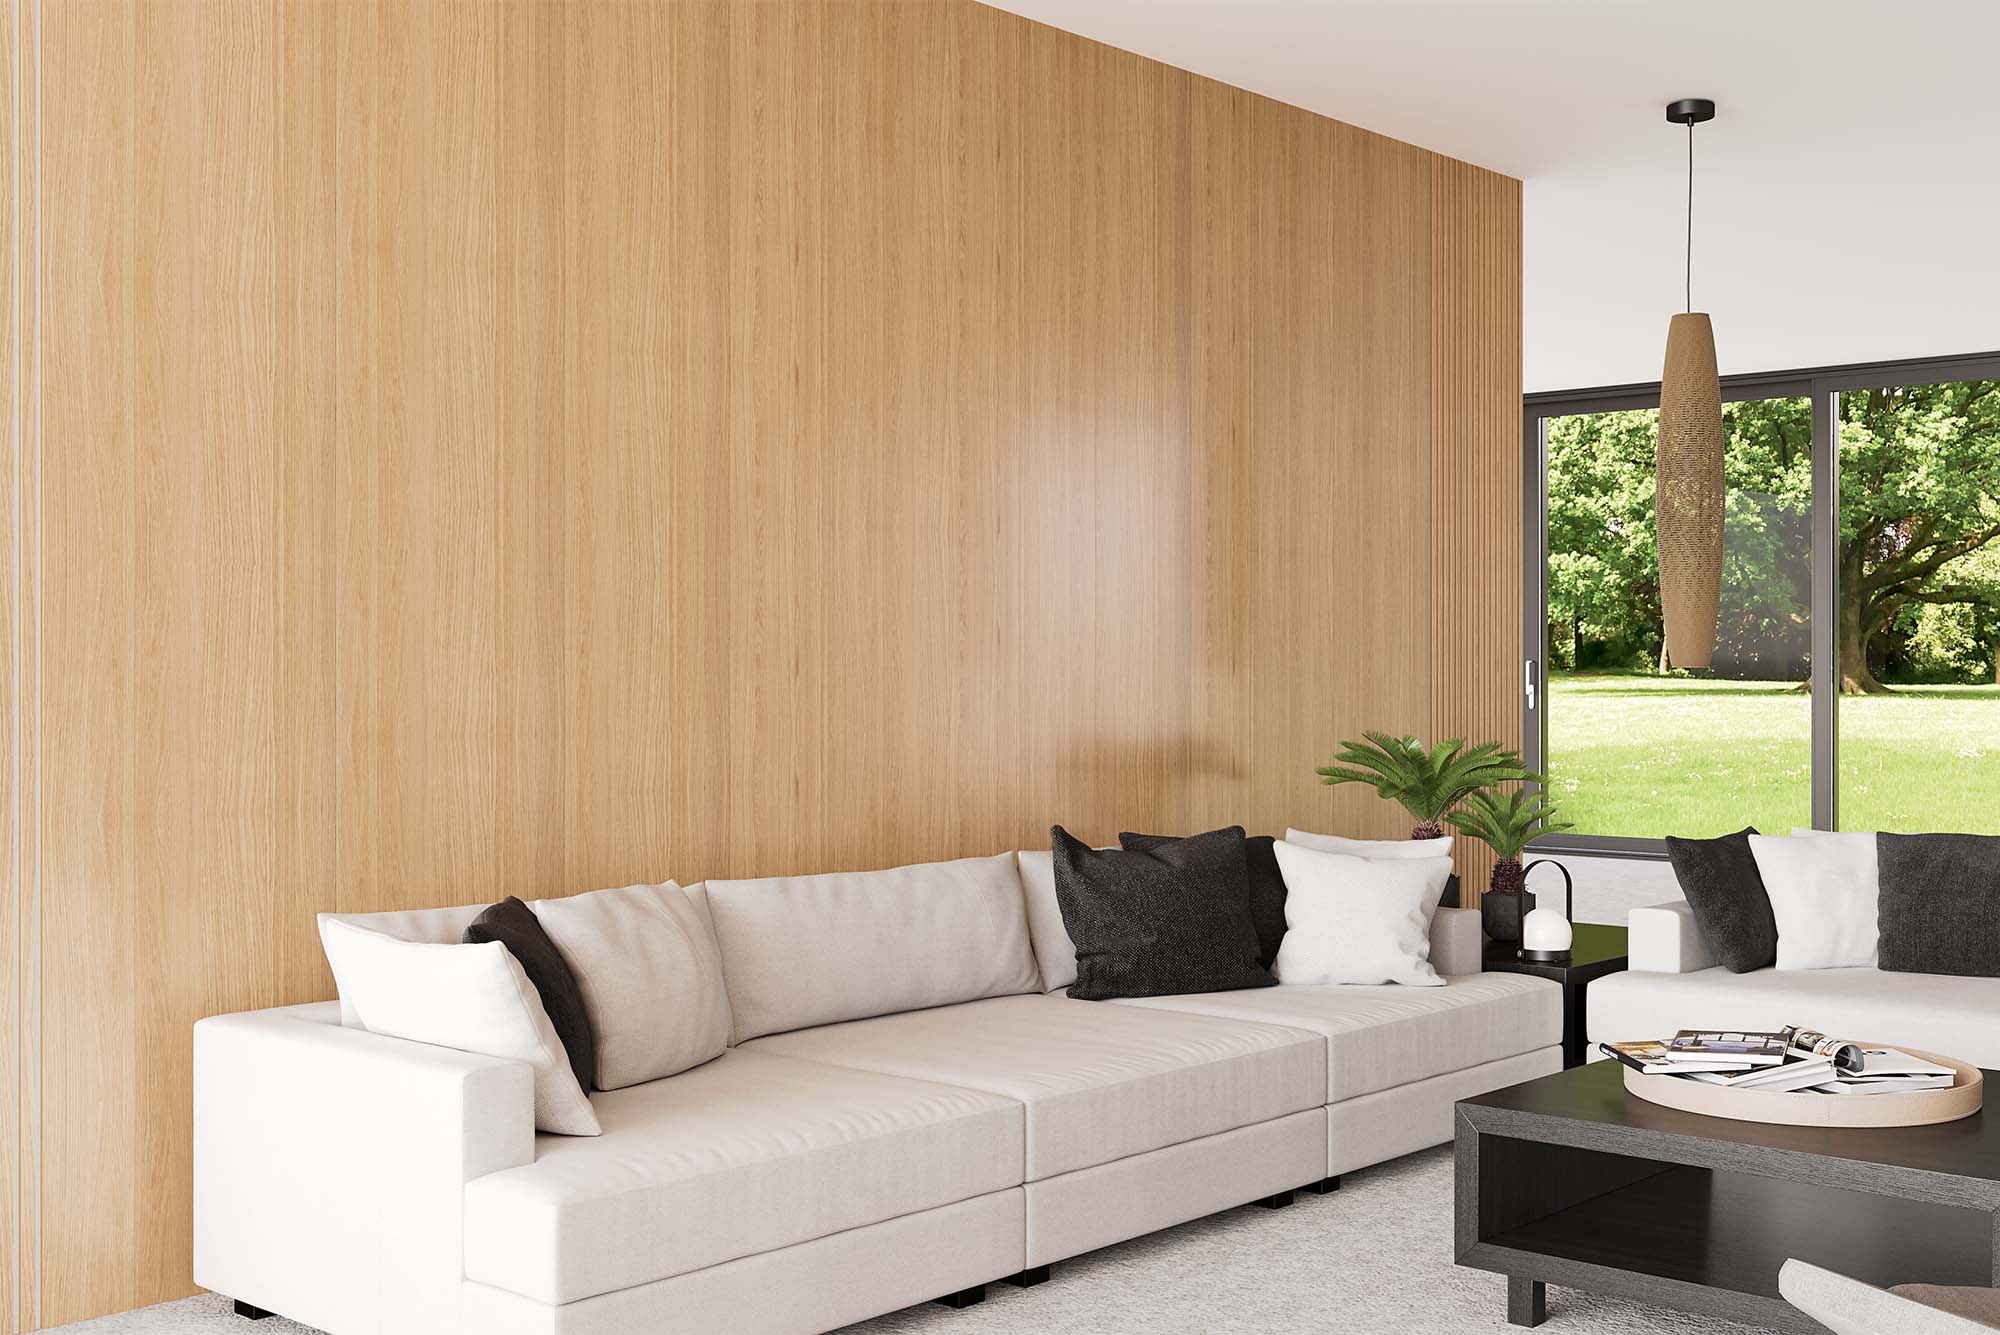 WS-Wood and classic oak slat wall in livingroom side view